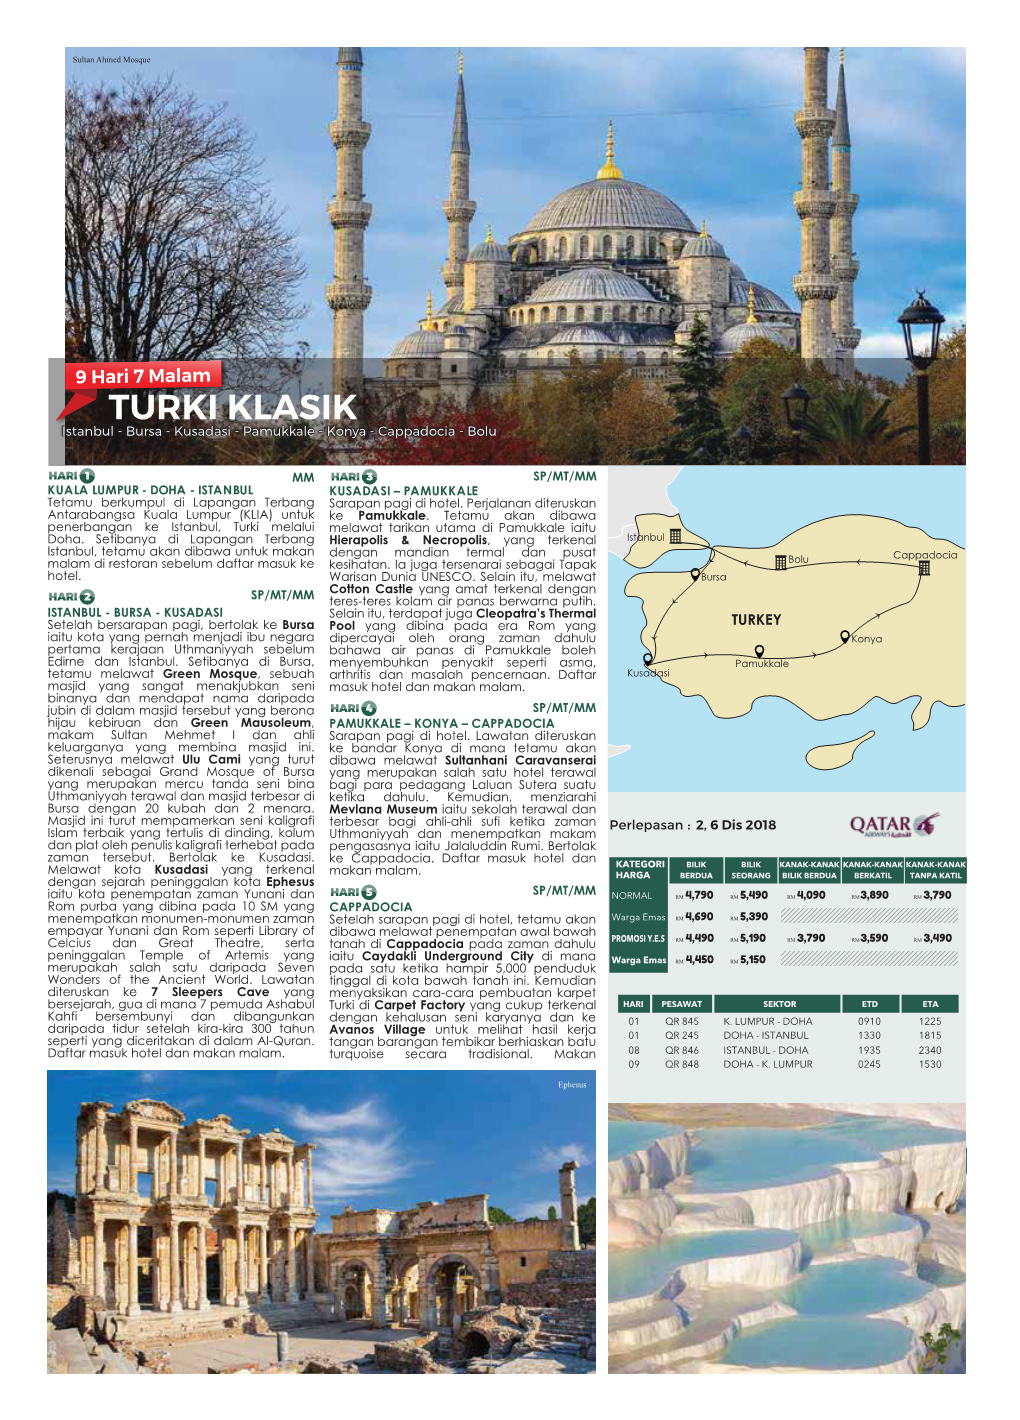 TURKI KLASIK Istanbul - Bursa - Kusadasi - Pamukkale - Konya - Cappadocia - Bolu